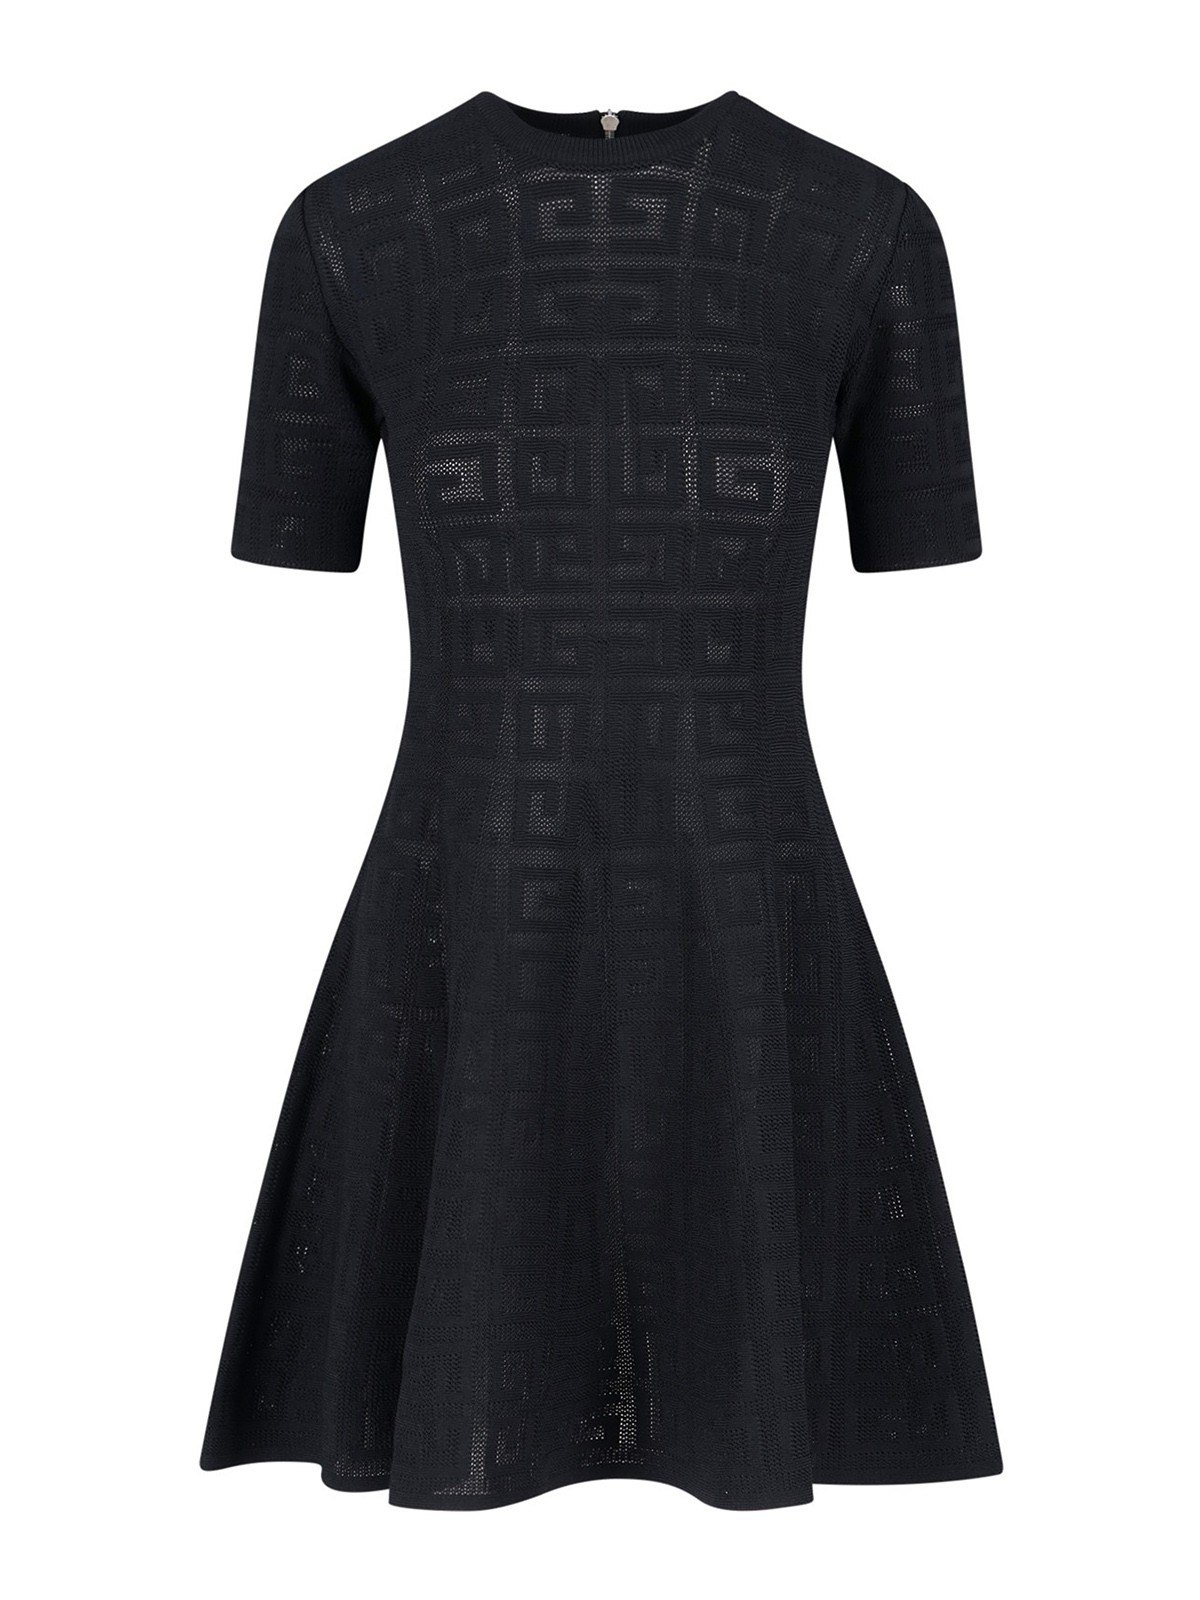 Vestidos cortos Givenchy - Vestido Corto - Negro - BW21DJ4ZA4001